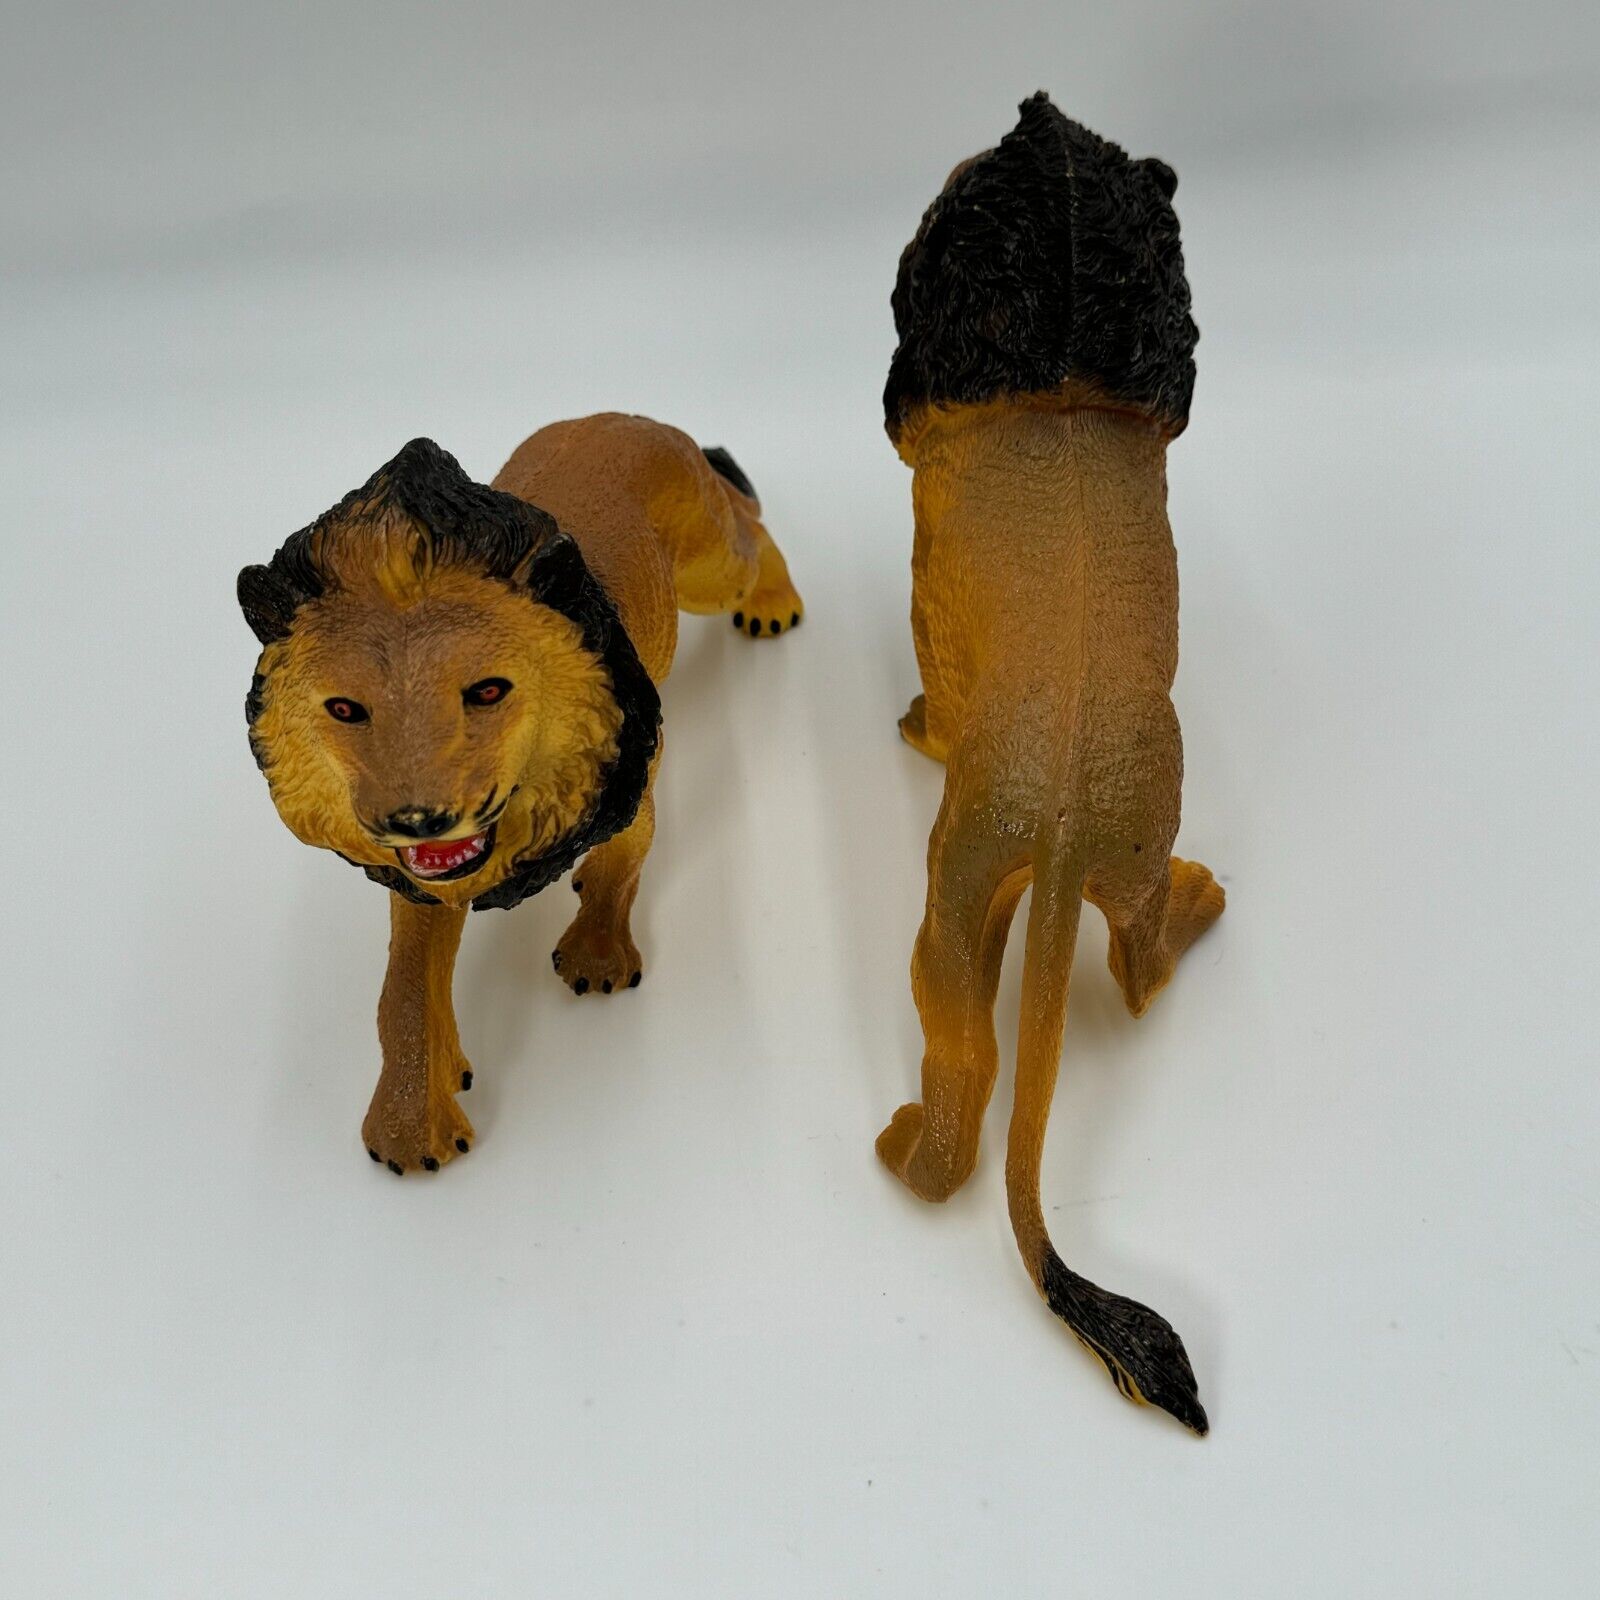 Lot of 5 Vintage Animal Fiugures Plastic Lions Tiger Cheetah Girraffe Kids Toys